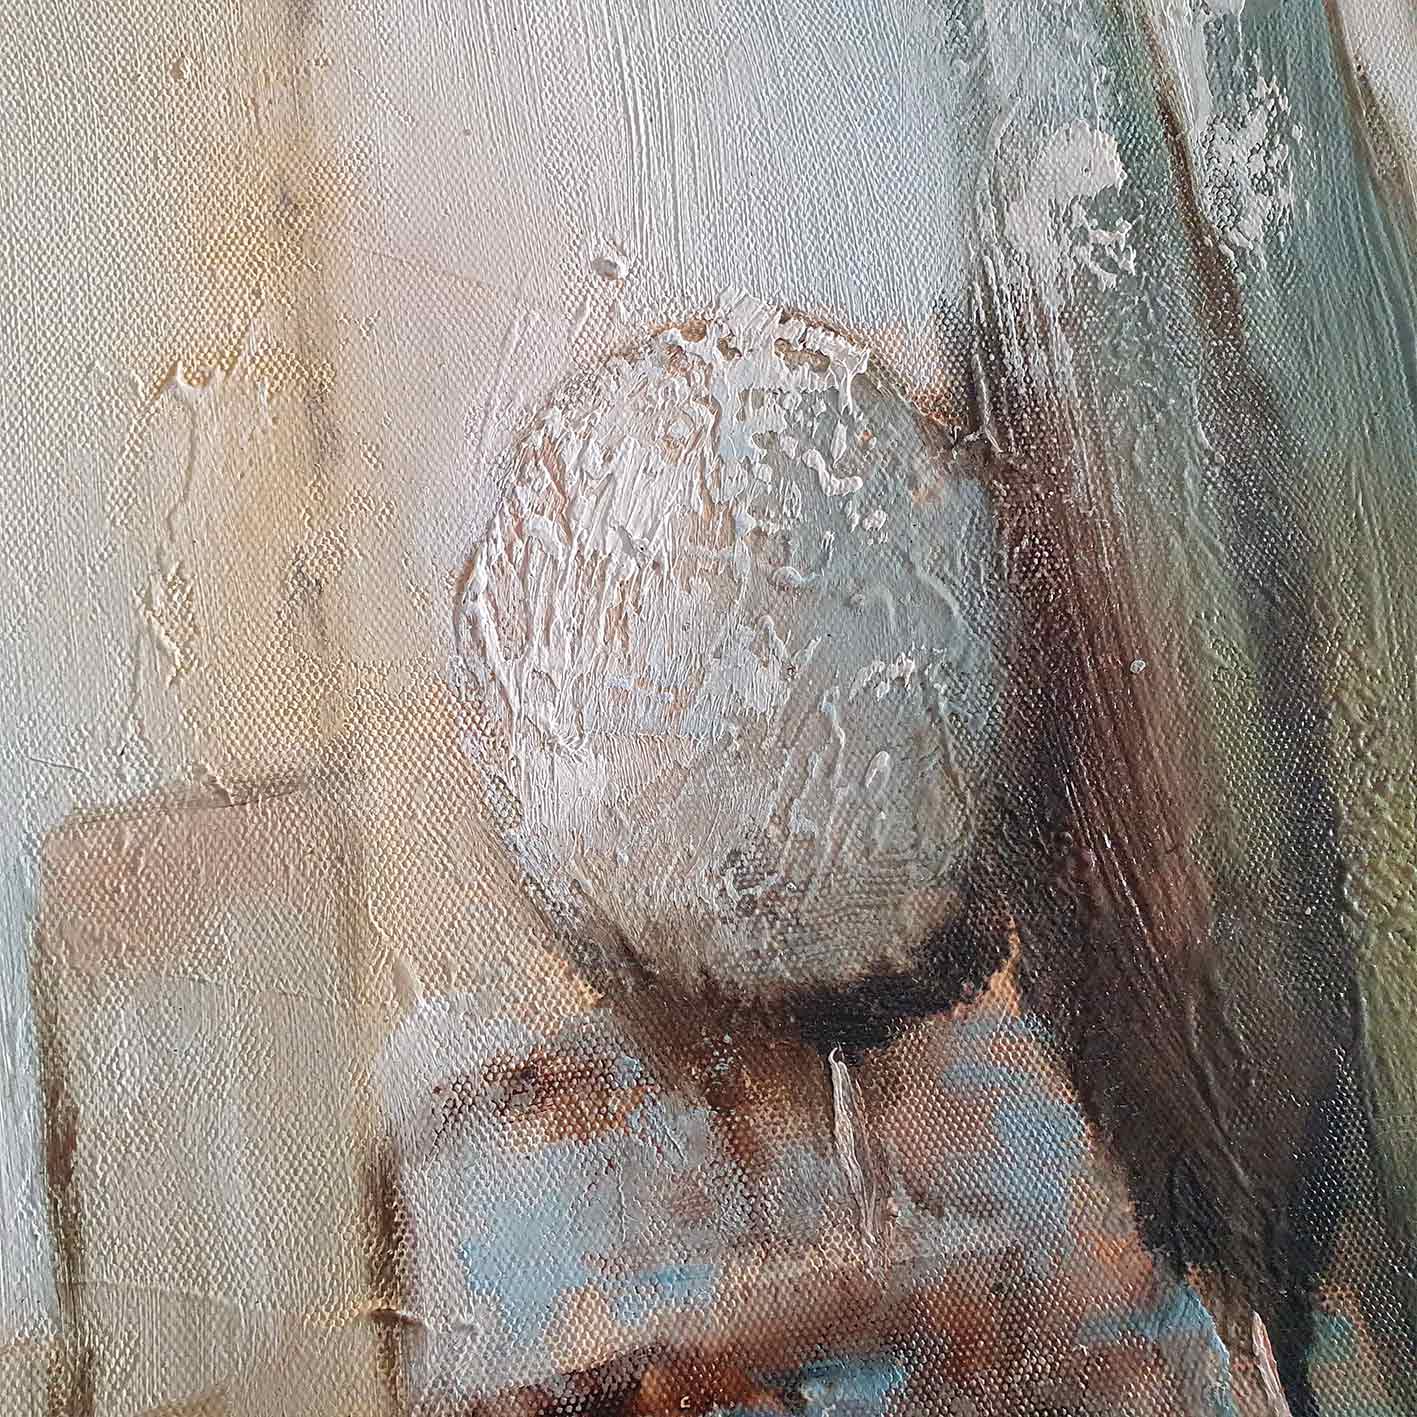 Urban Abstract Diptychon Gemälde 50x60 cm [2 Stück]